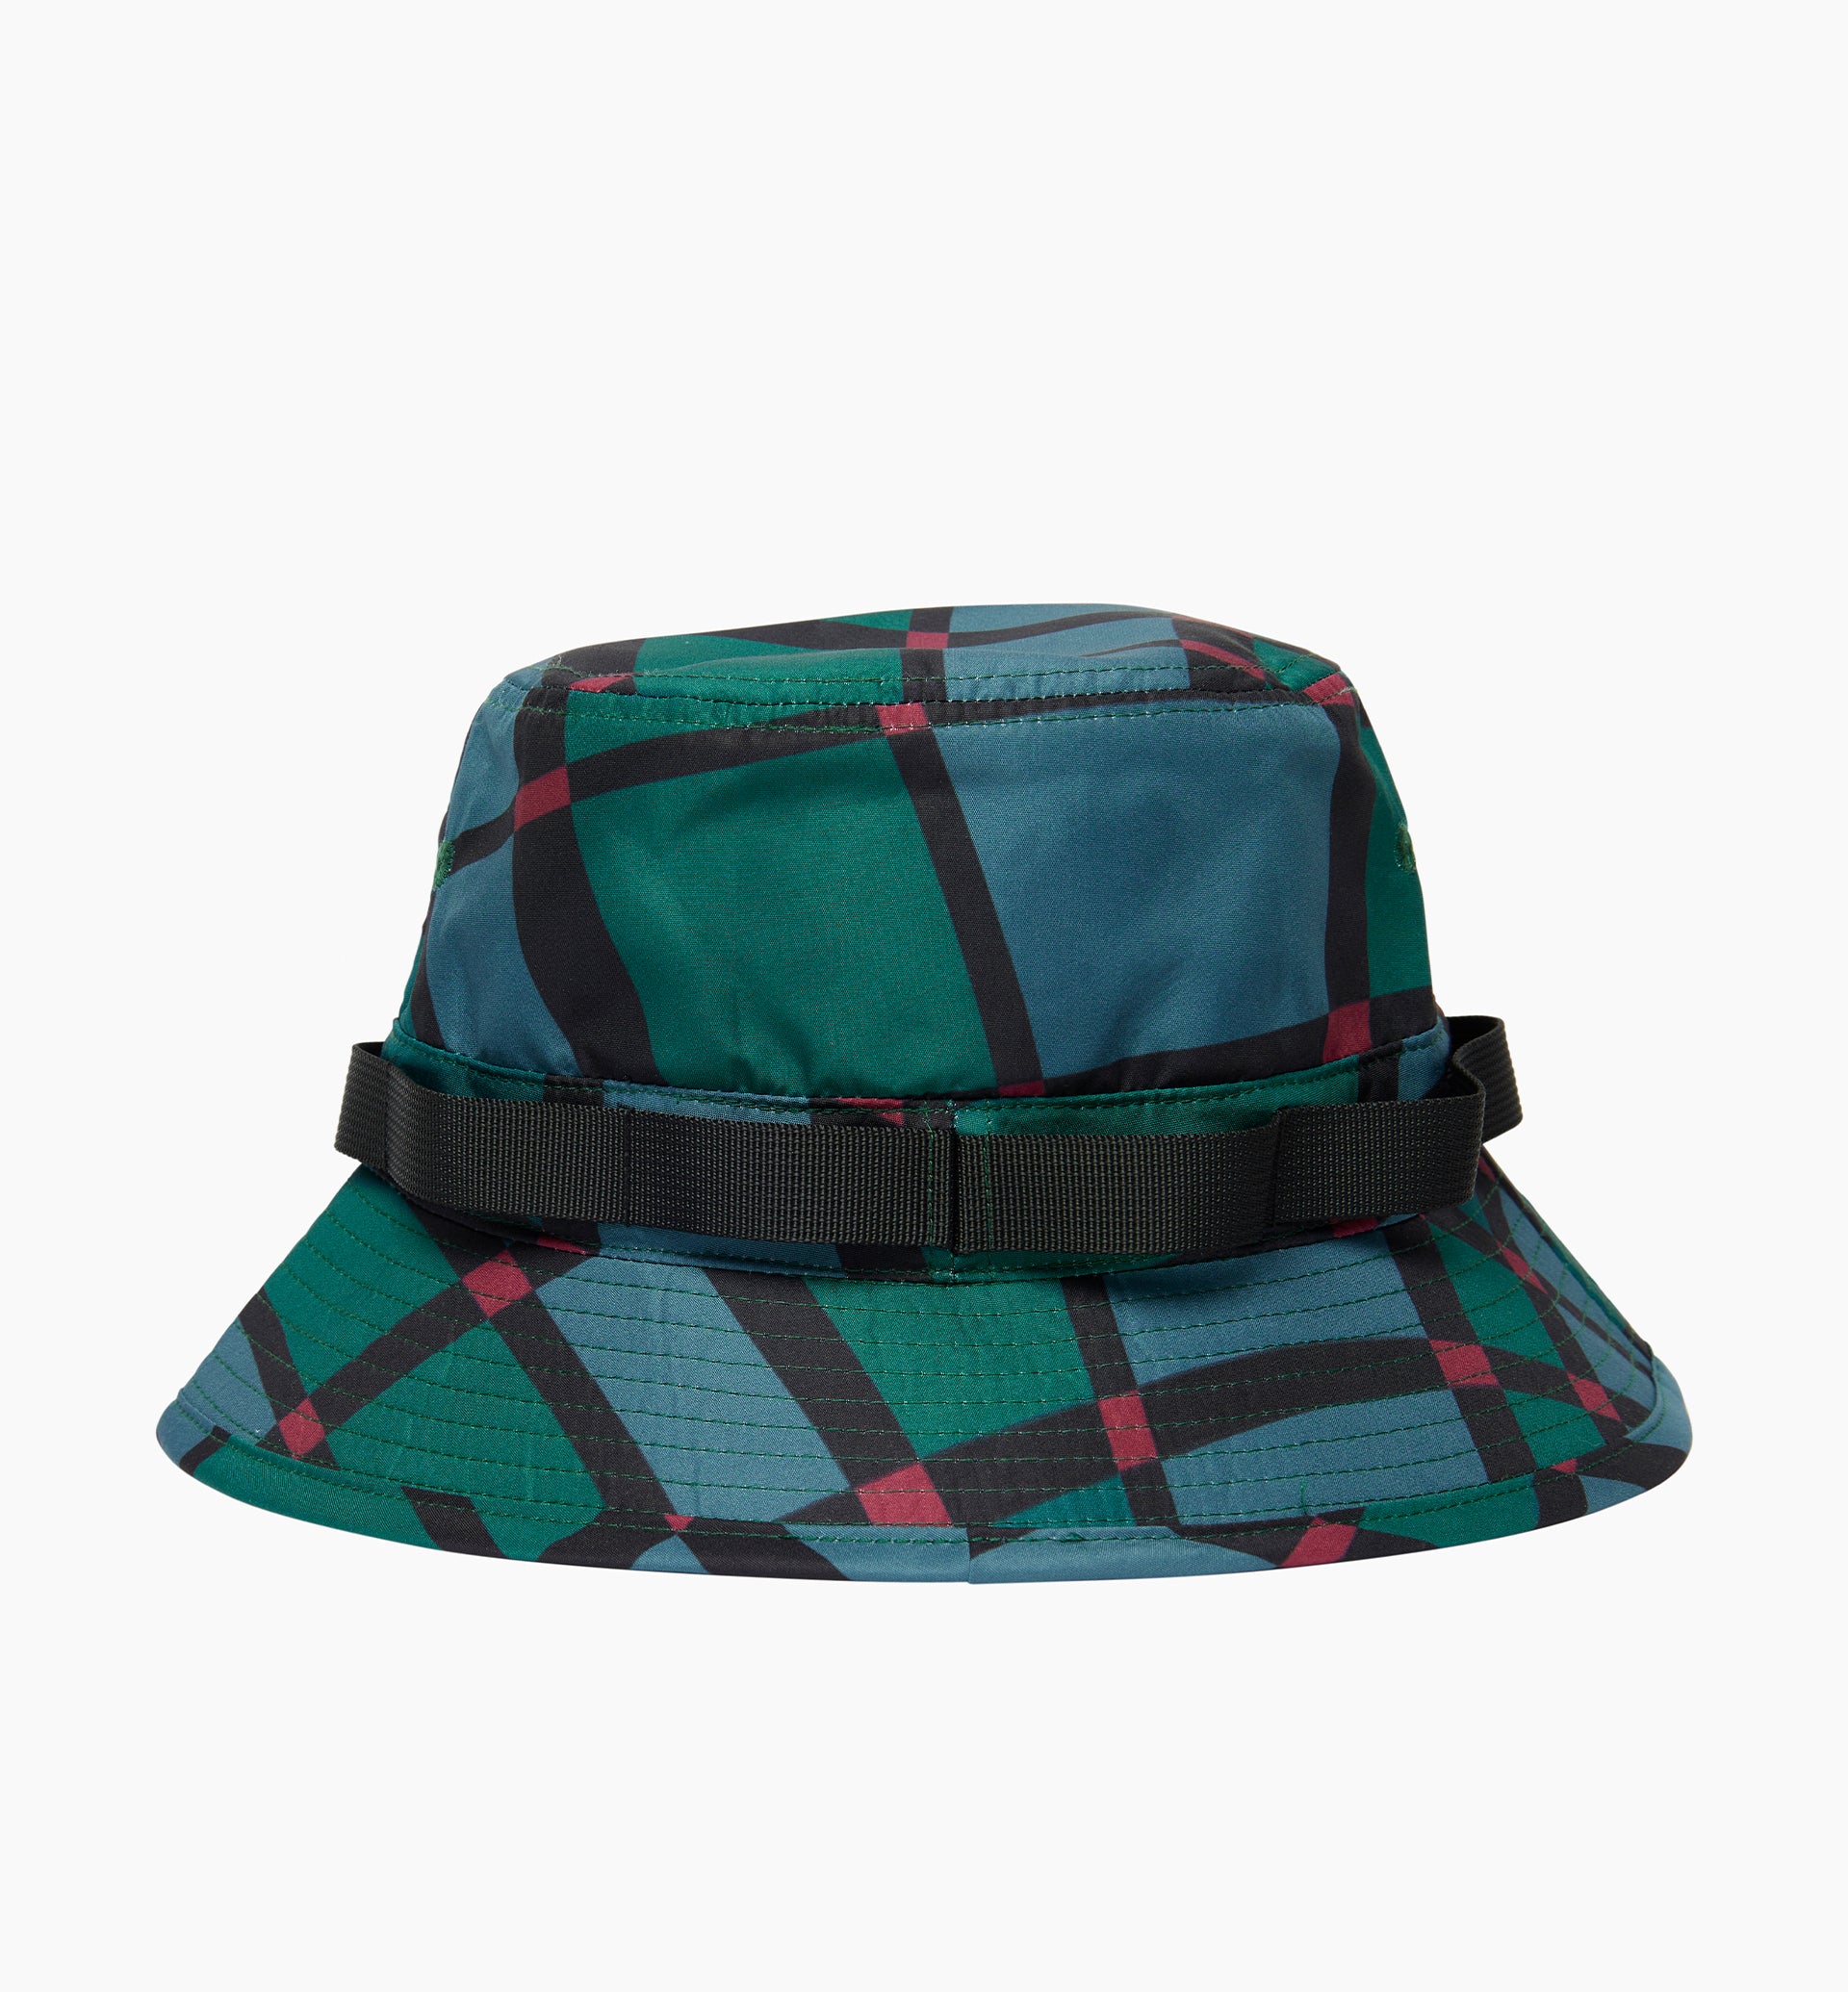 Parra - squared waves pattern safari hat